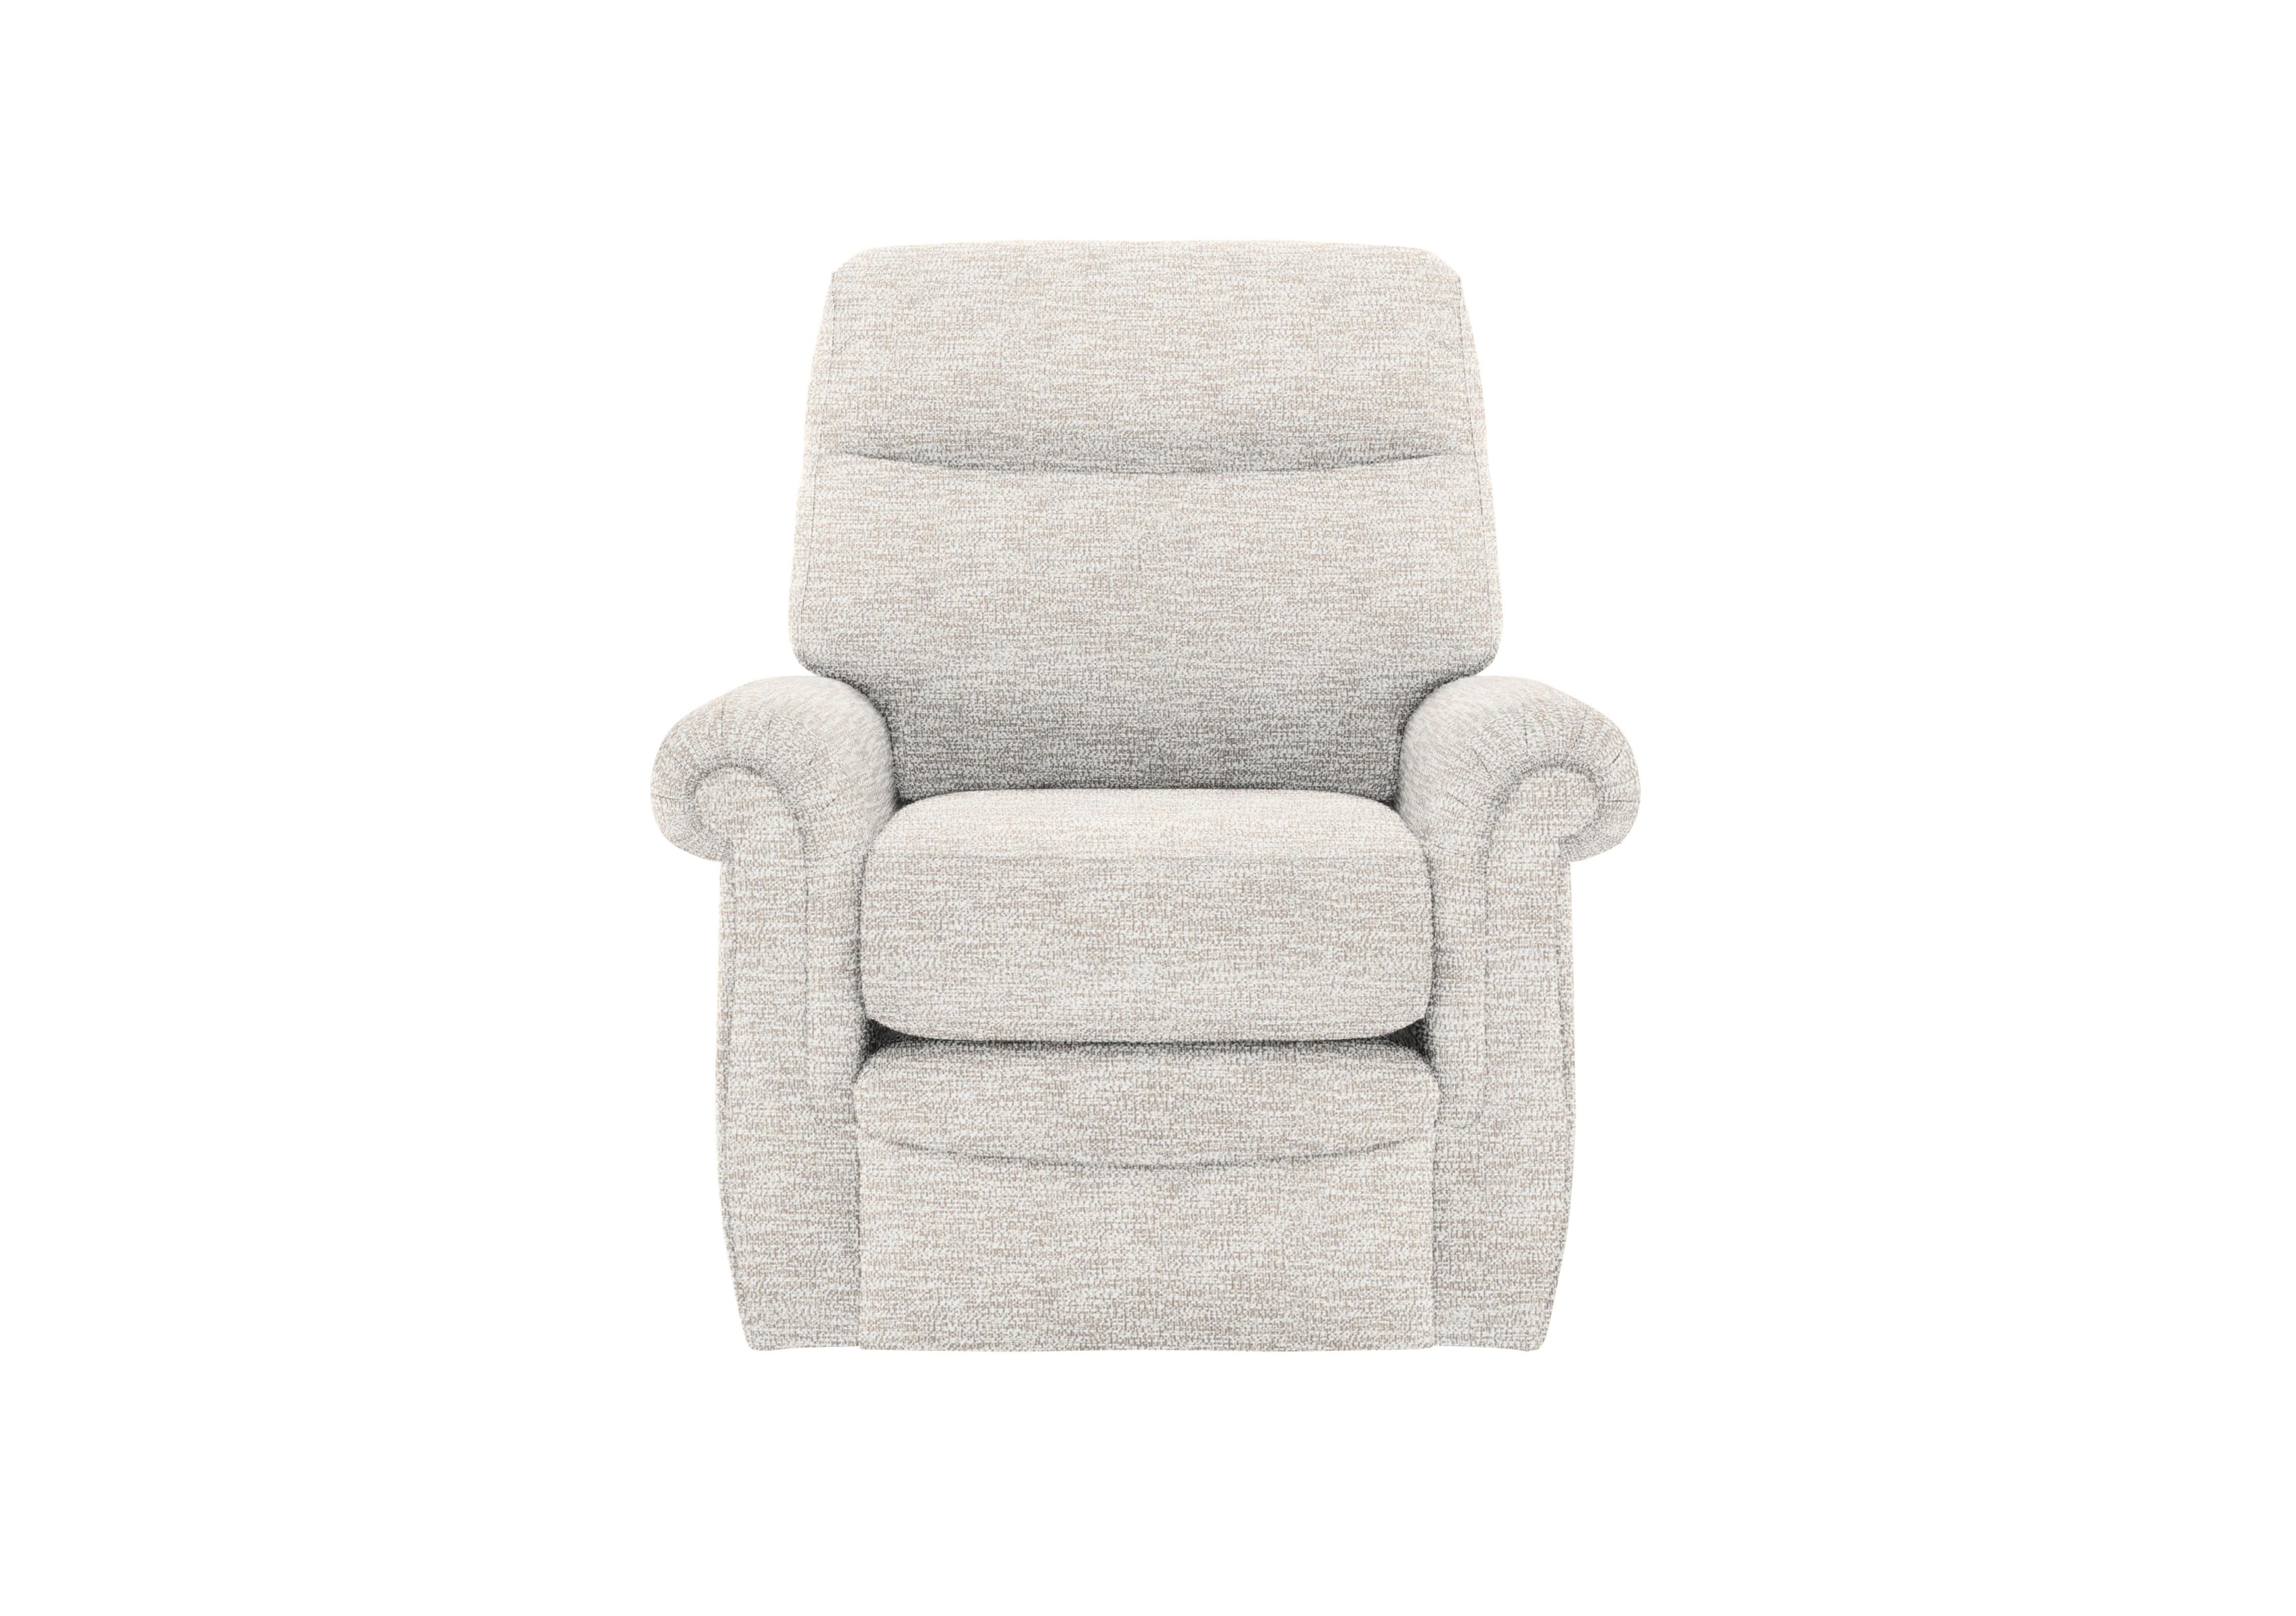 Avon Fabric Armchair in C931 Rush Cream on Furniture Village